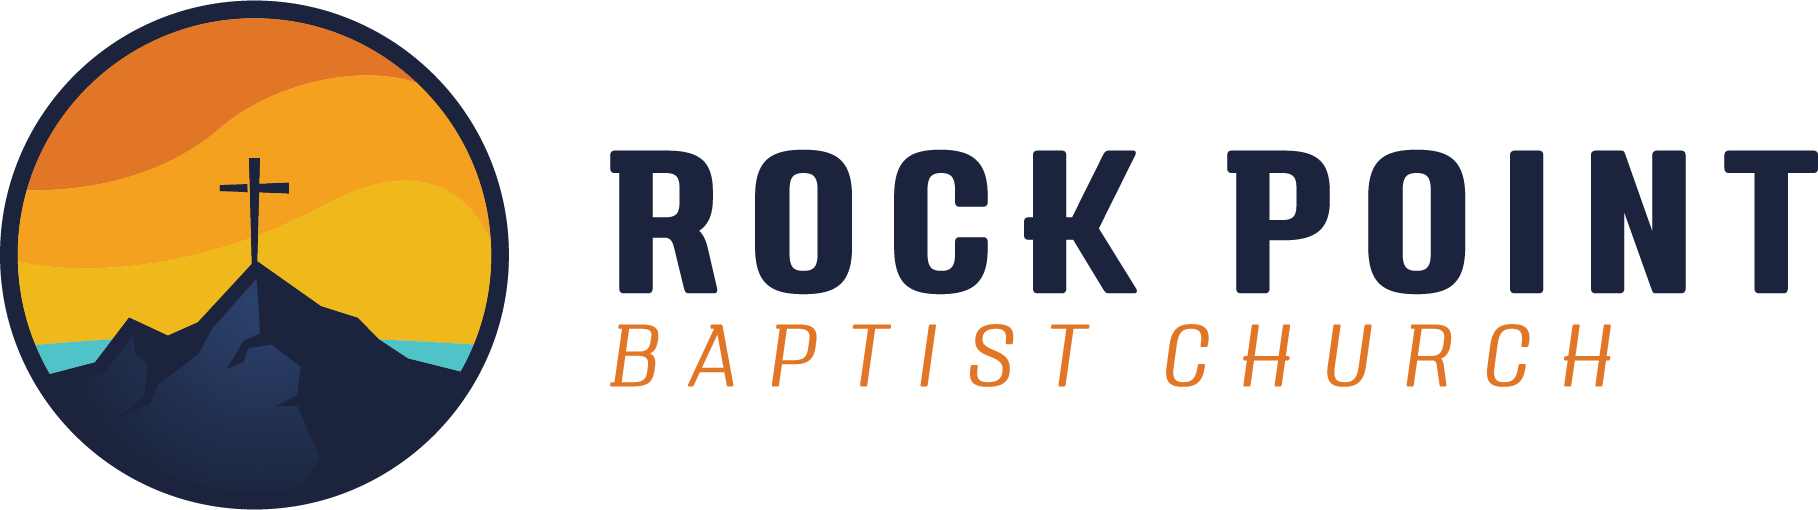 Rock Point Baptist Church